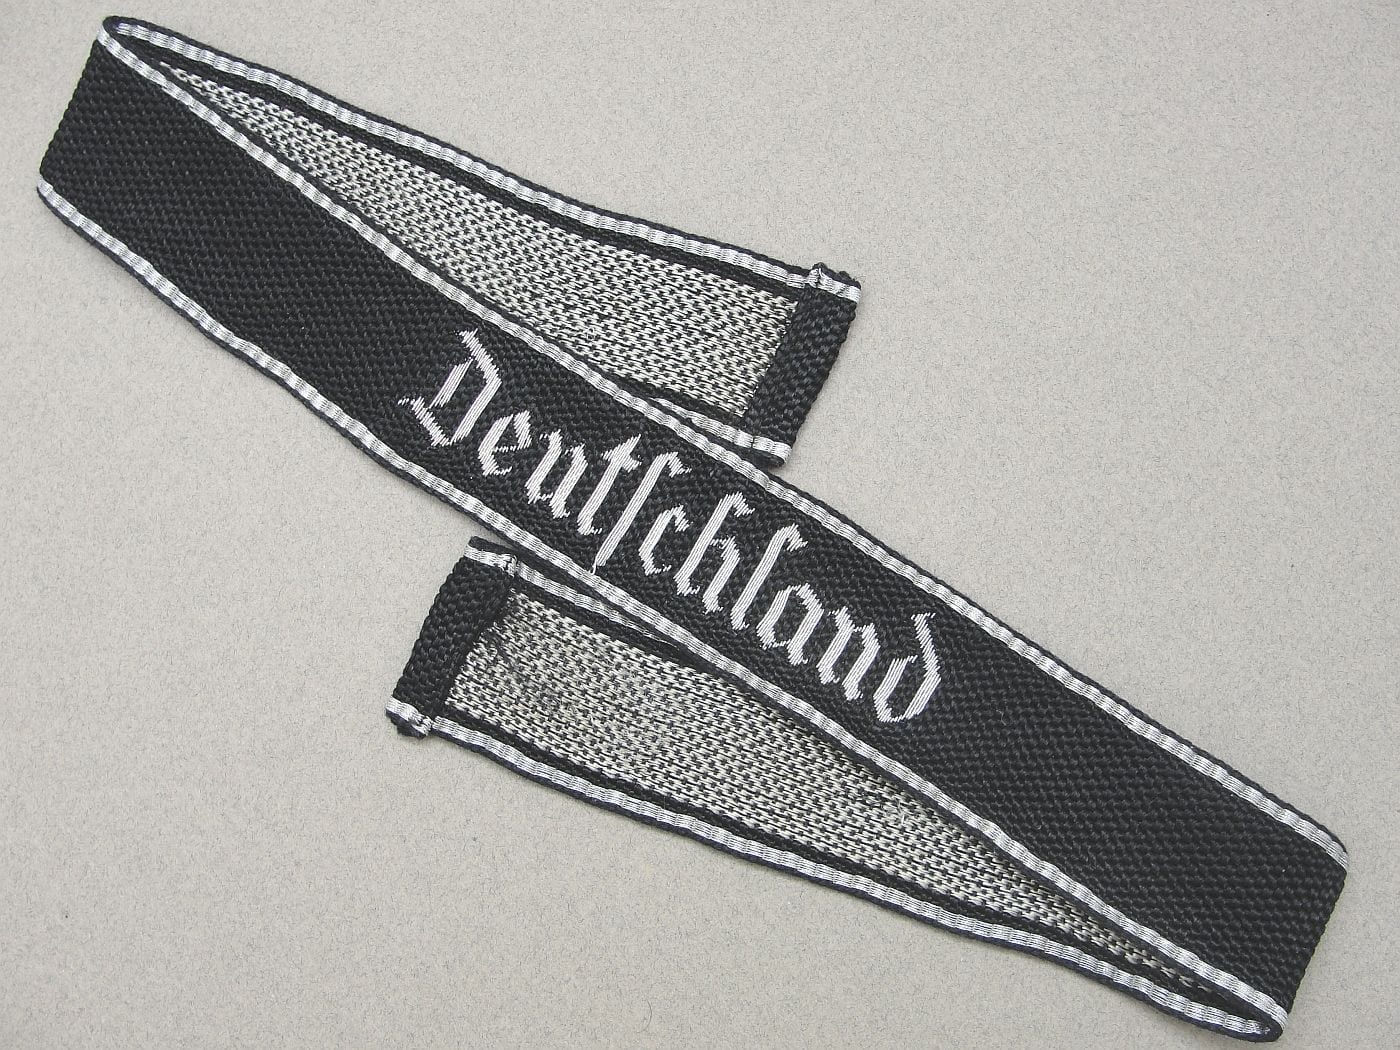 Flatwire SS Officer's "Deutschland" Cuff Title, Gothic Lettering